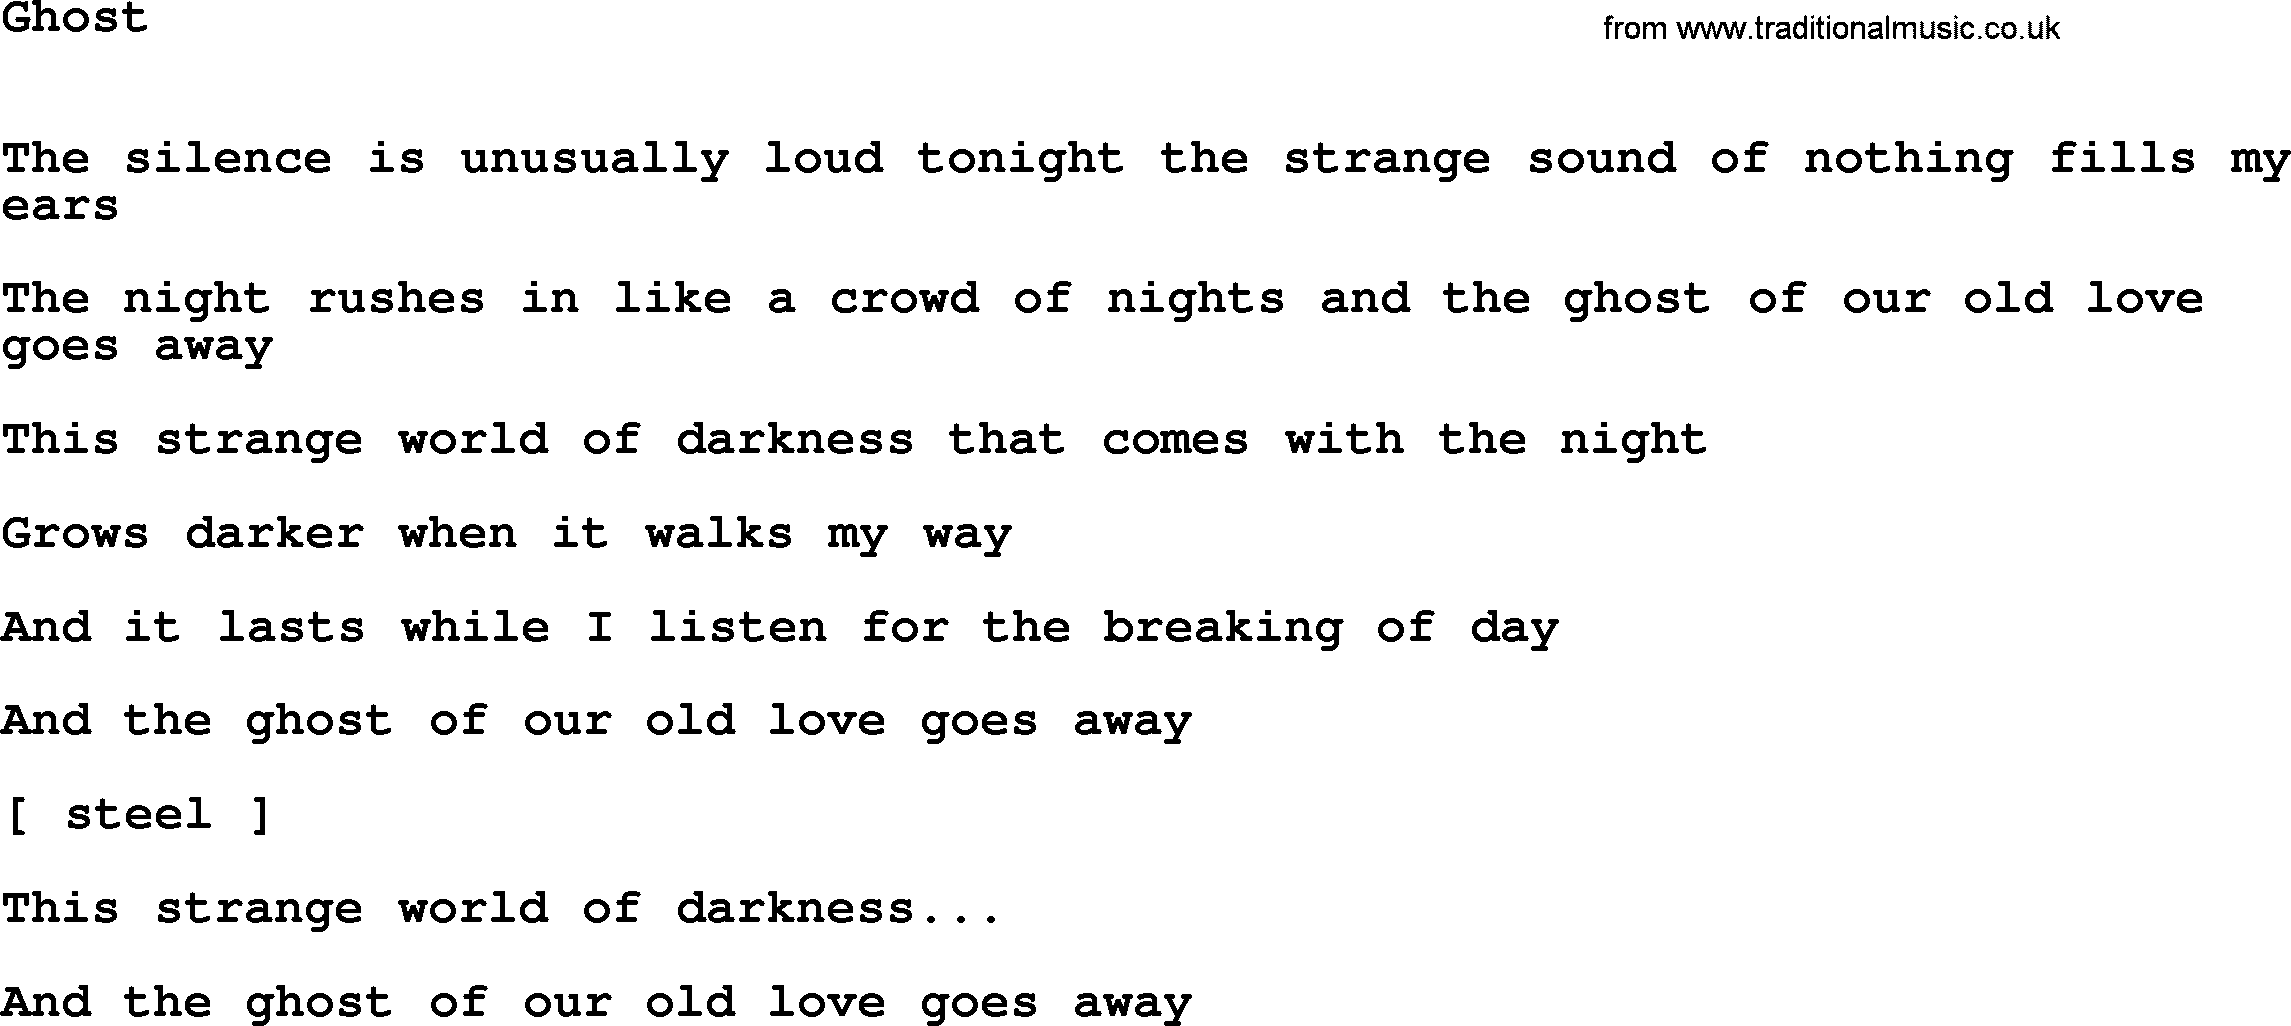 Willie Nelson song: Ghost lyrics